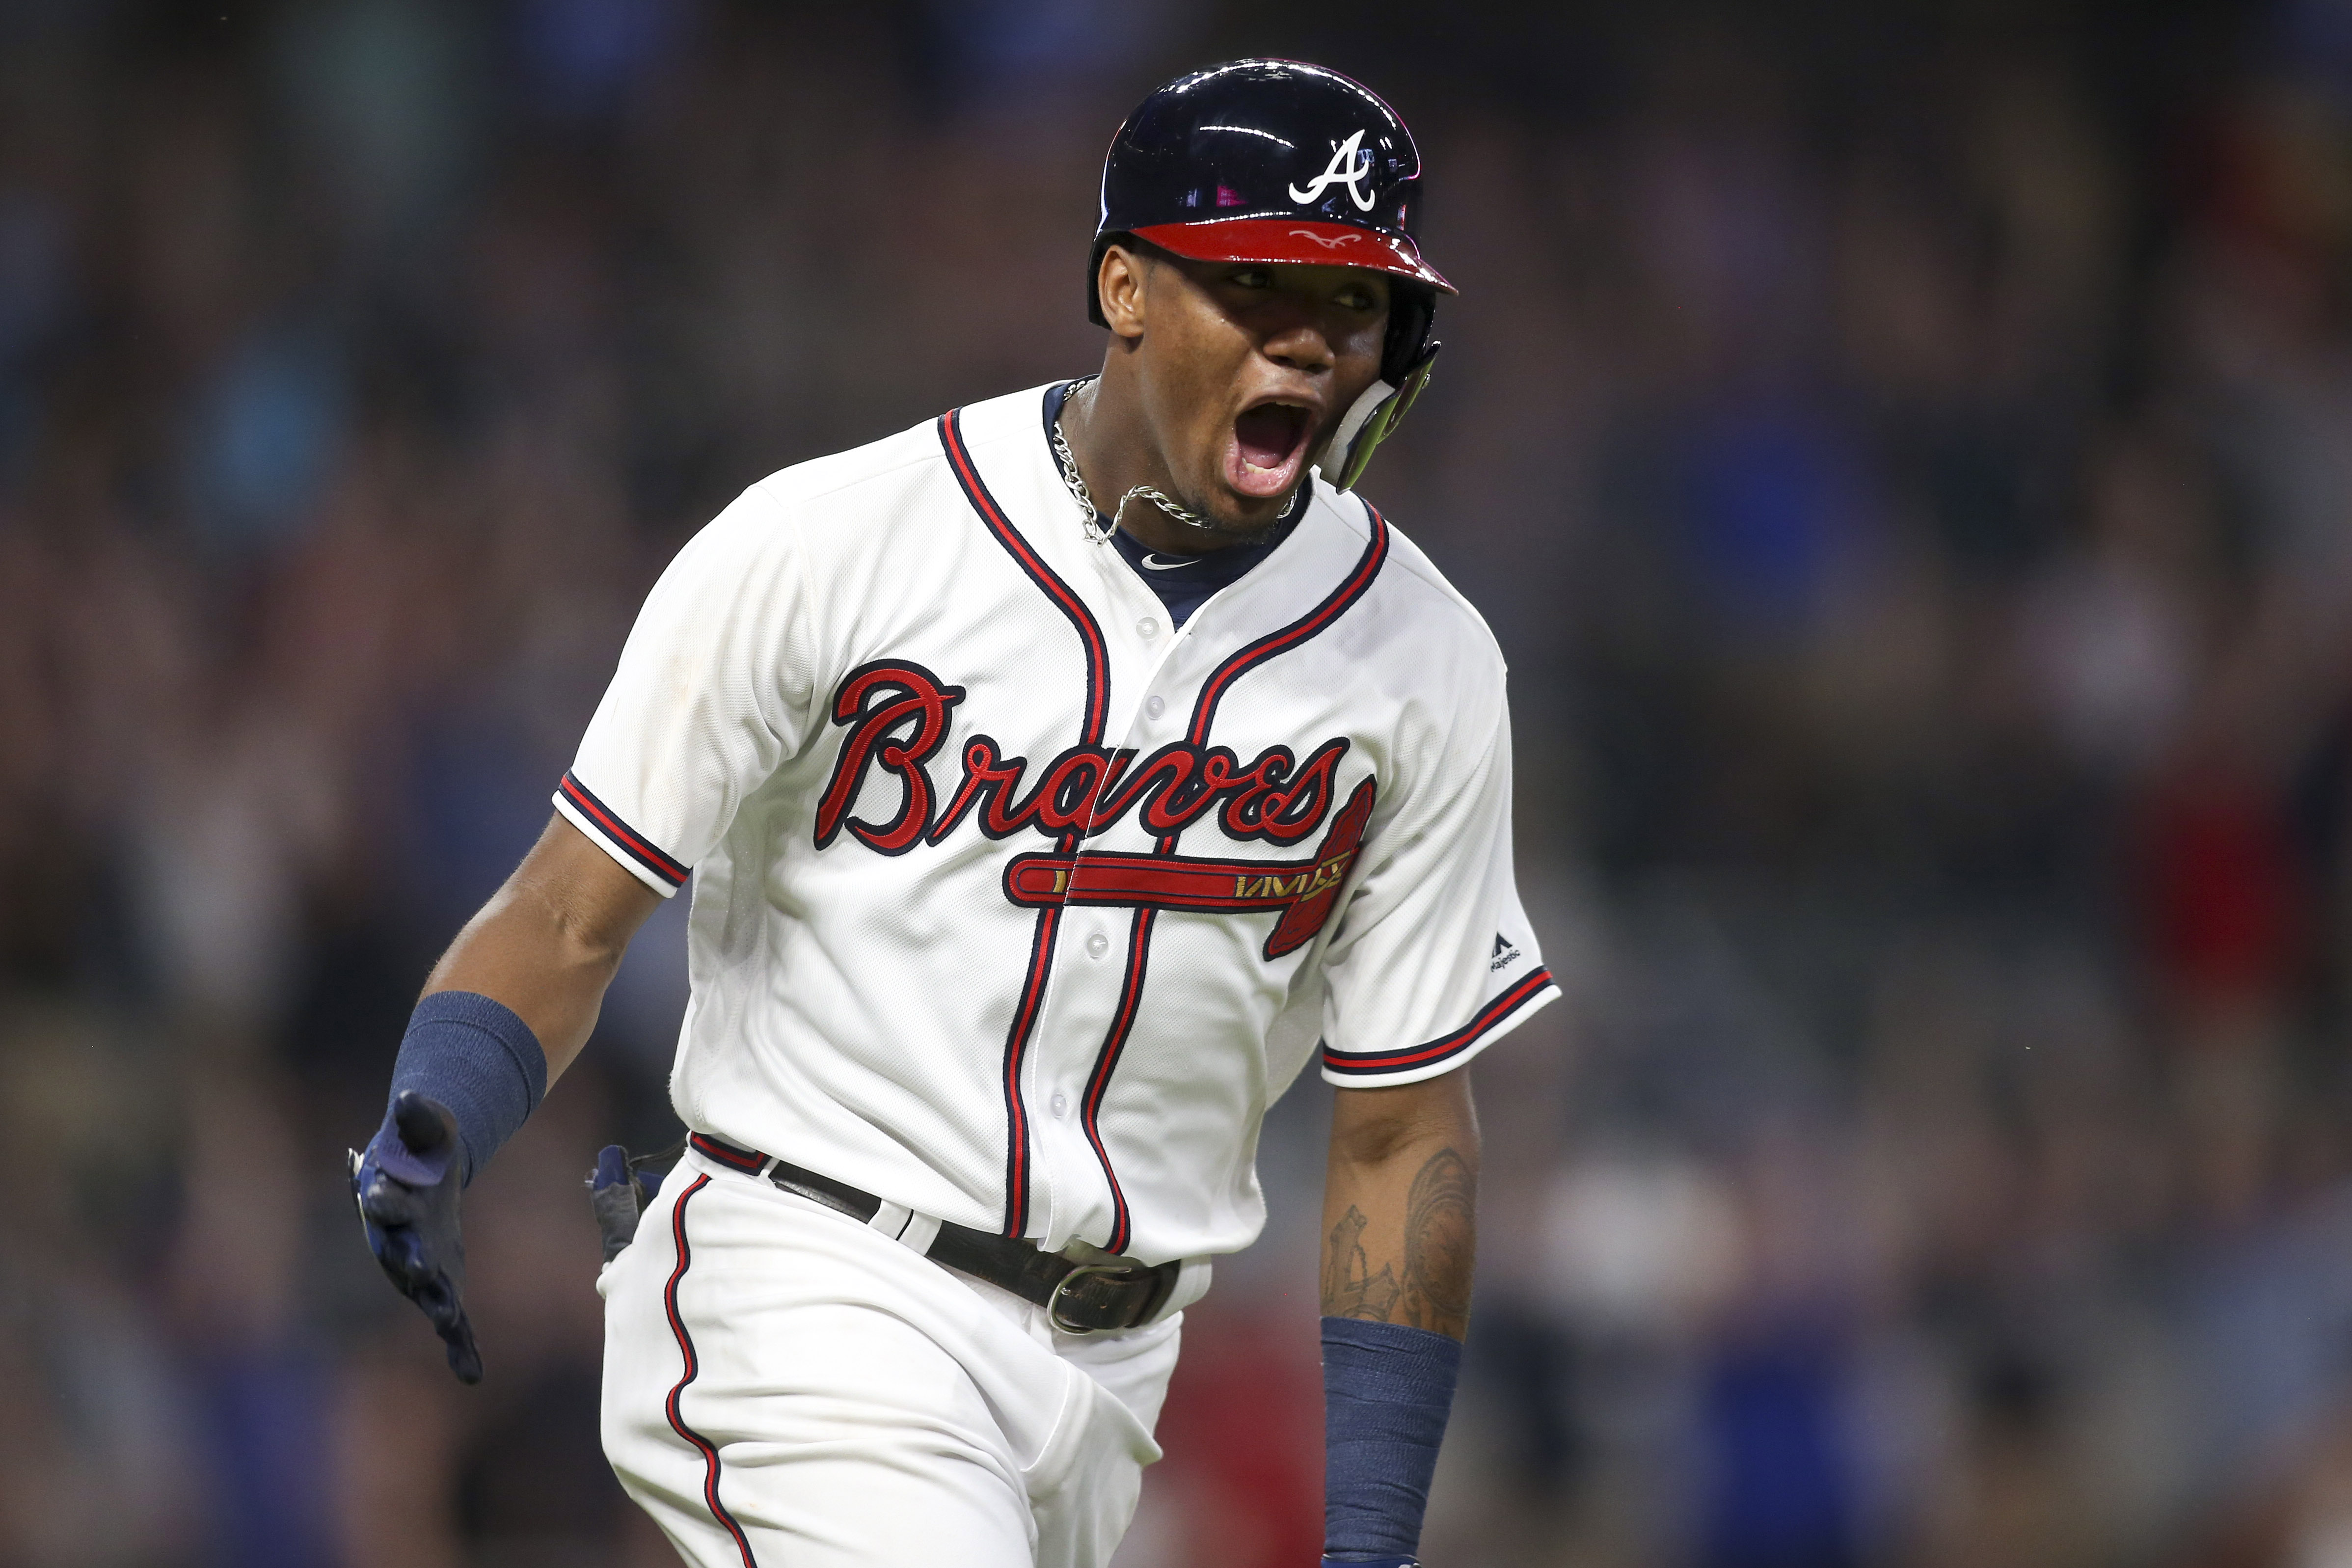 Atlanta Braves: Dansby Swanson a Bright Spot on Struggling Braves Roster